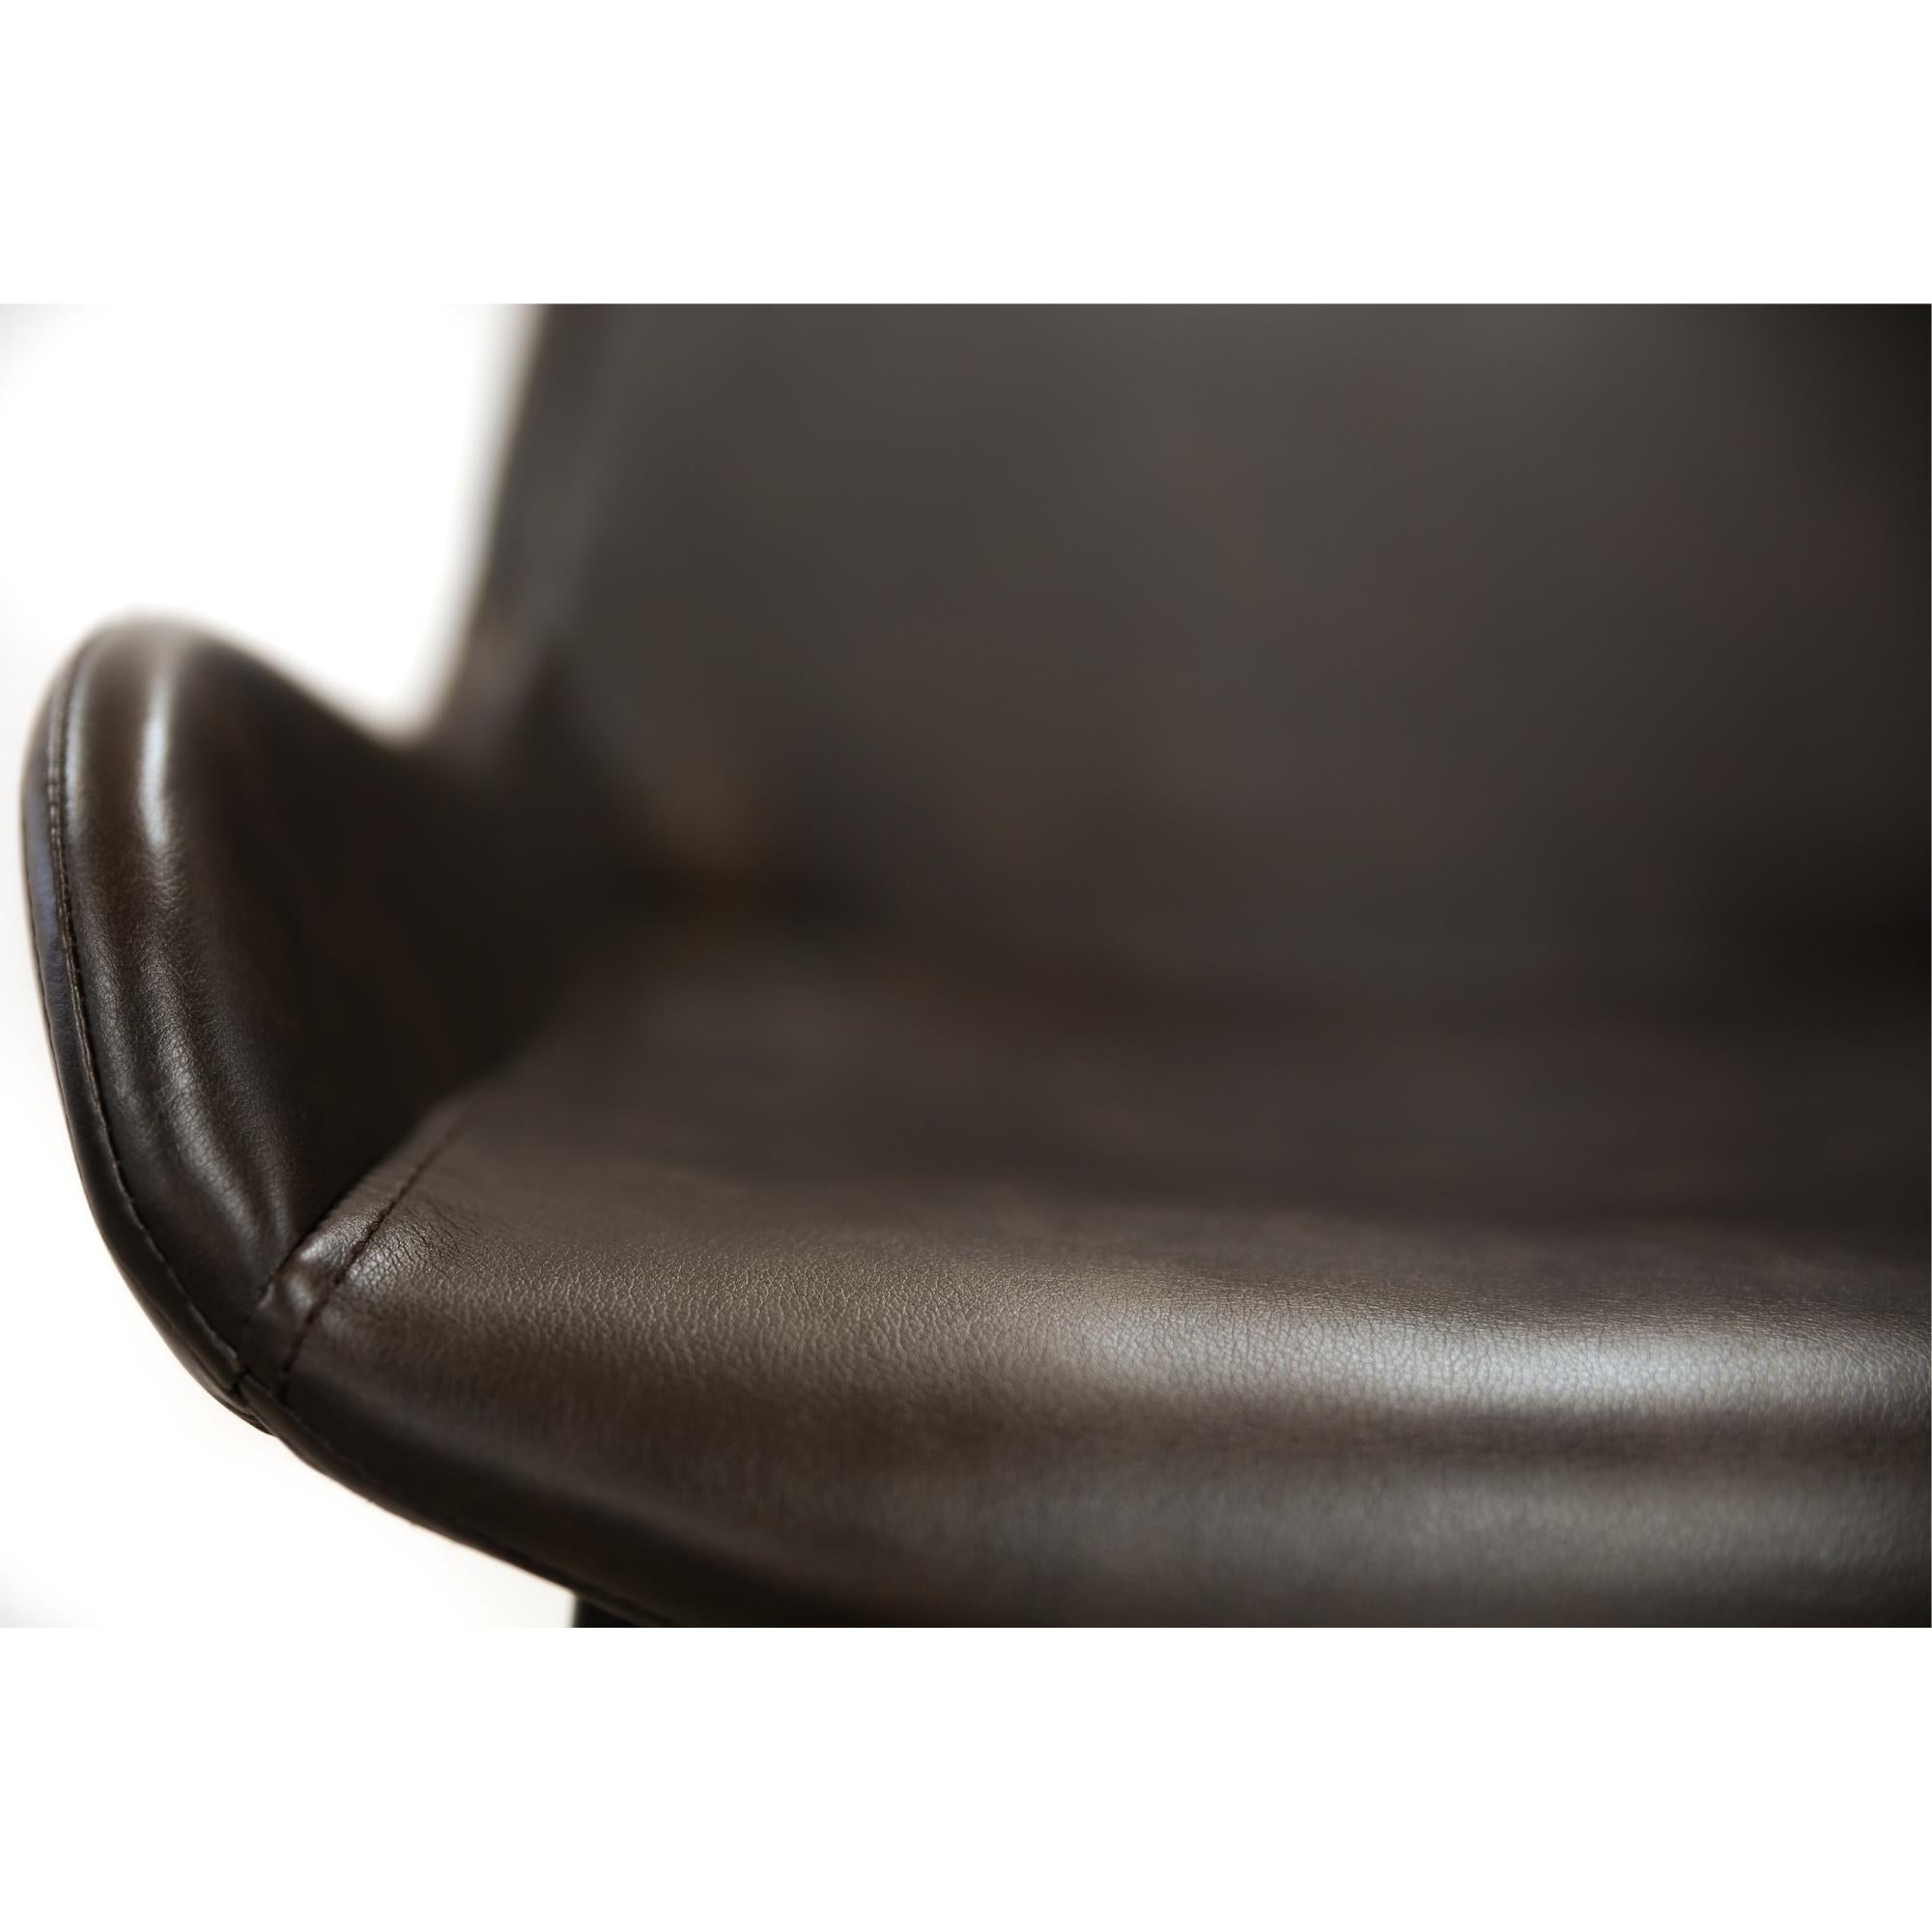 Brando  Set of 8 PU Leather Upholstered Bar Chair Metal Leg Stool - Brown Deals499